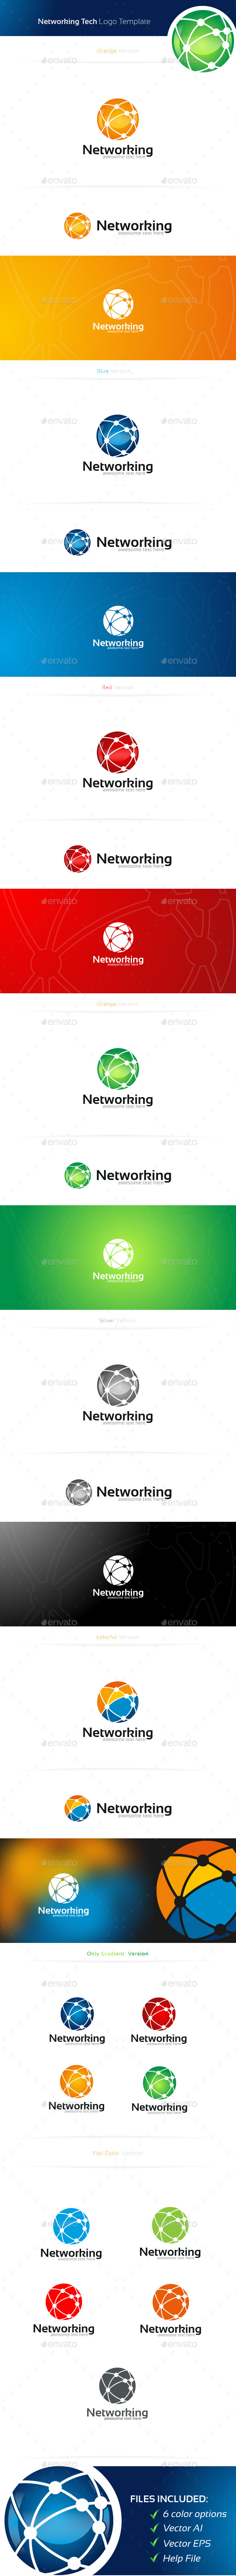 Networking Logo